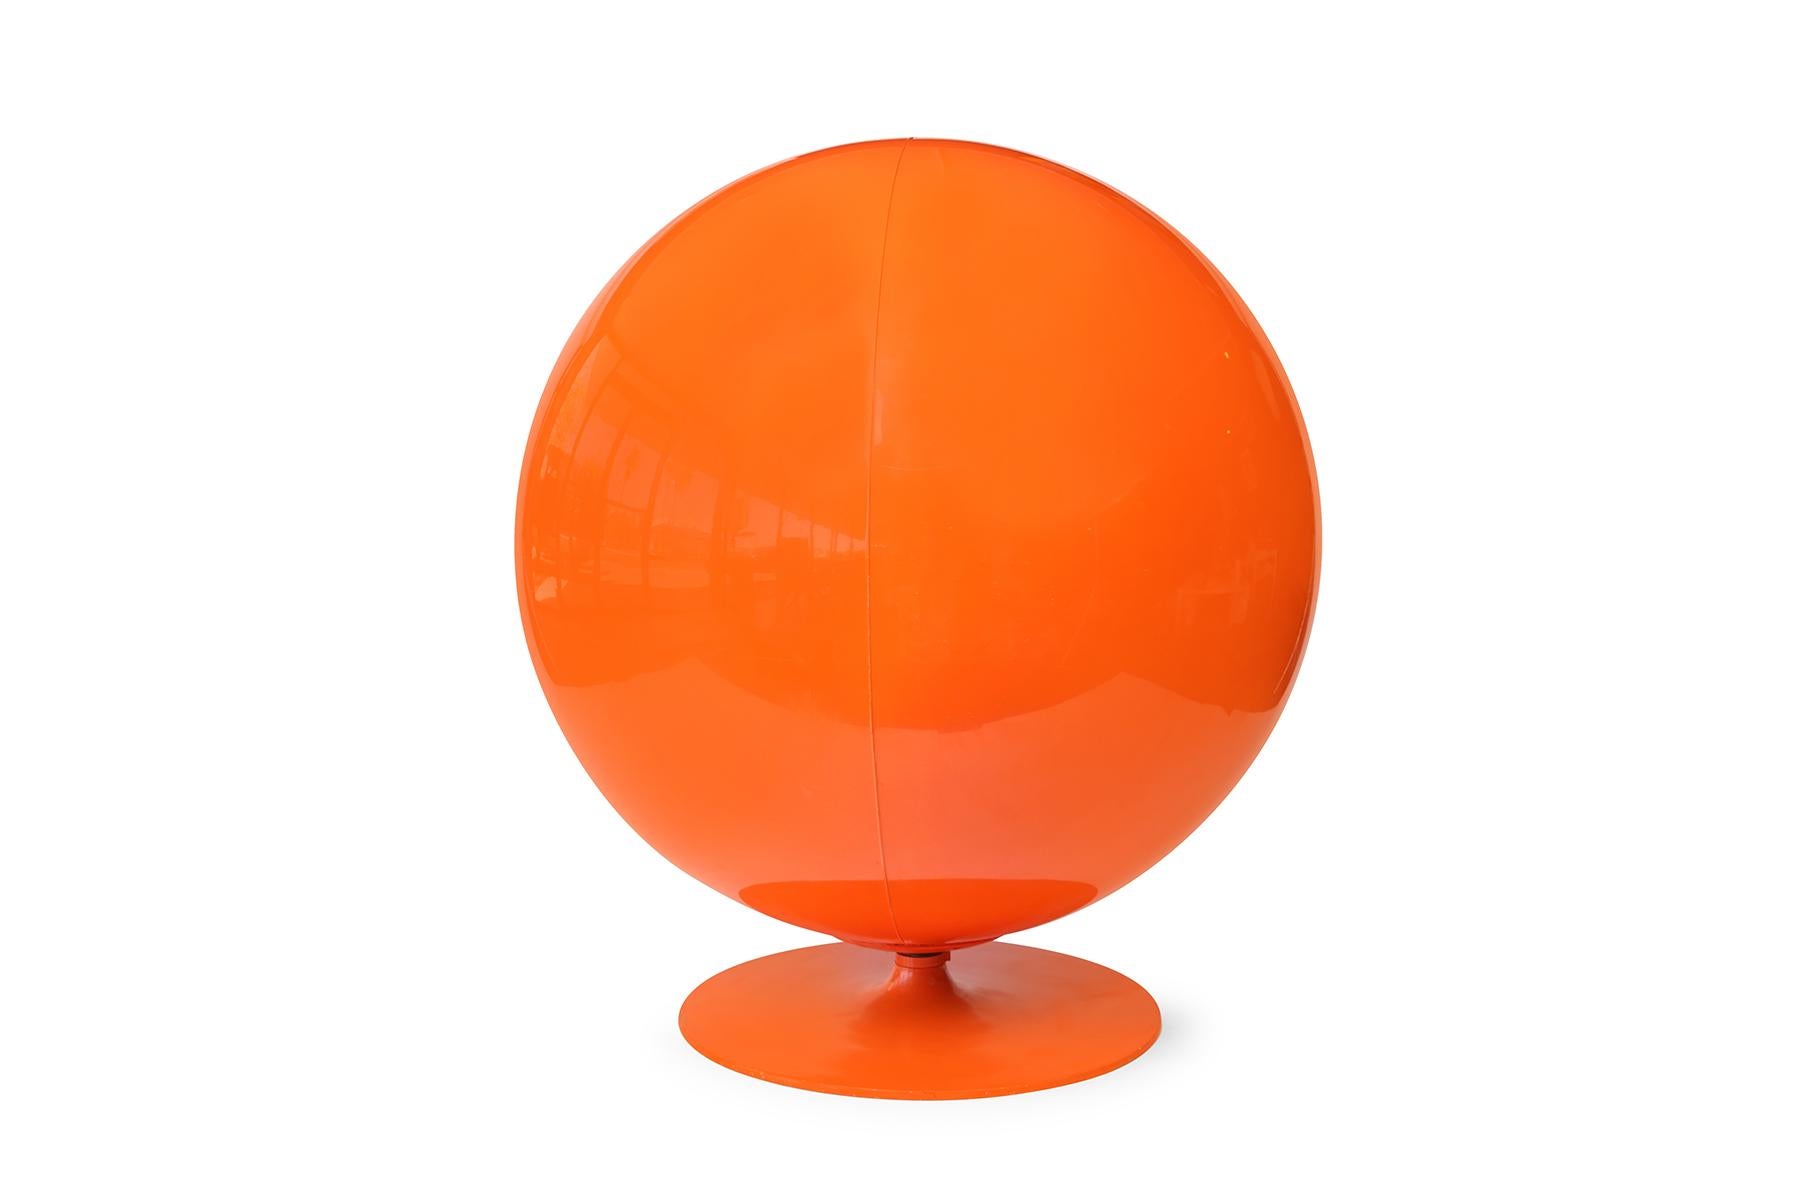 eero aarnio ball chair orange